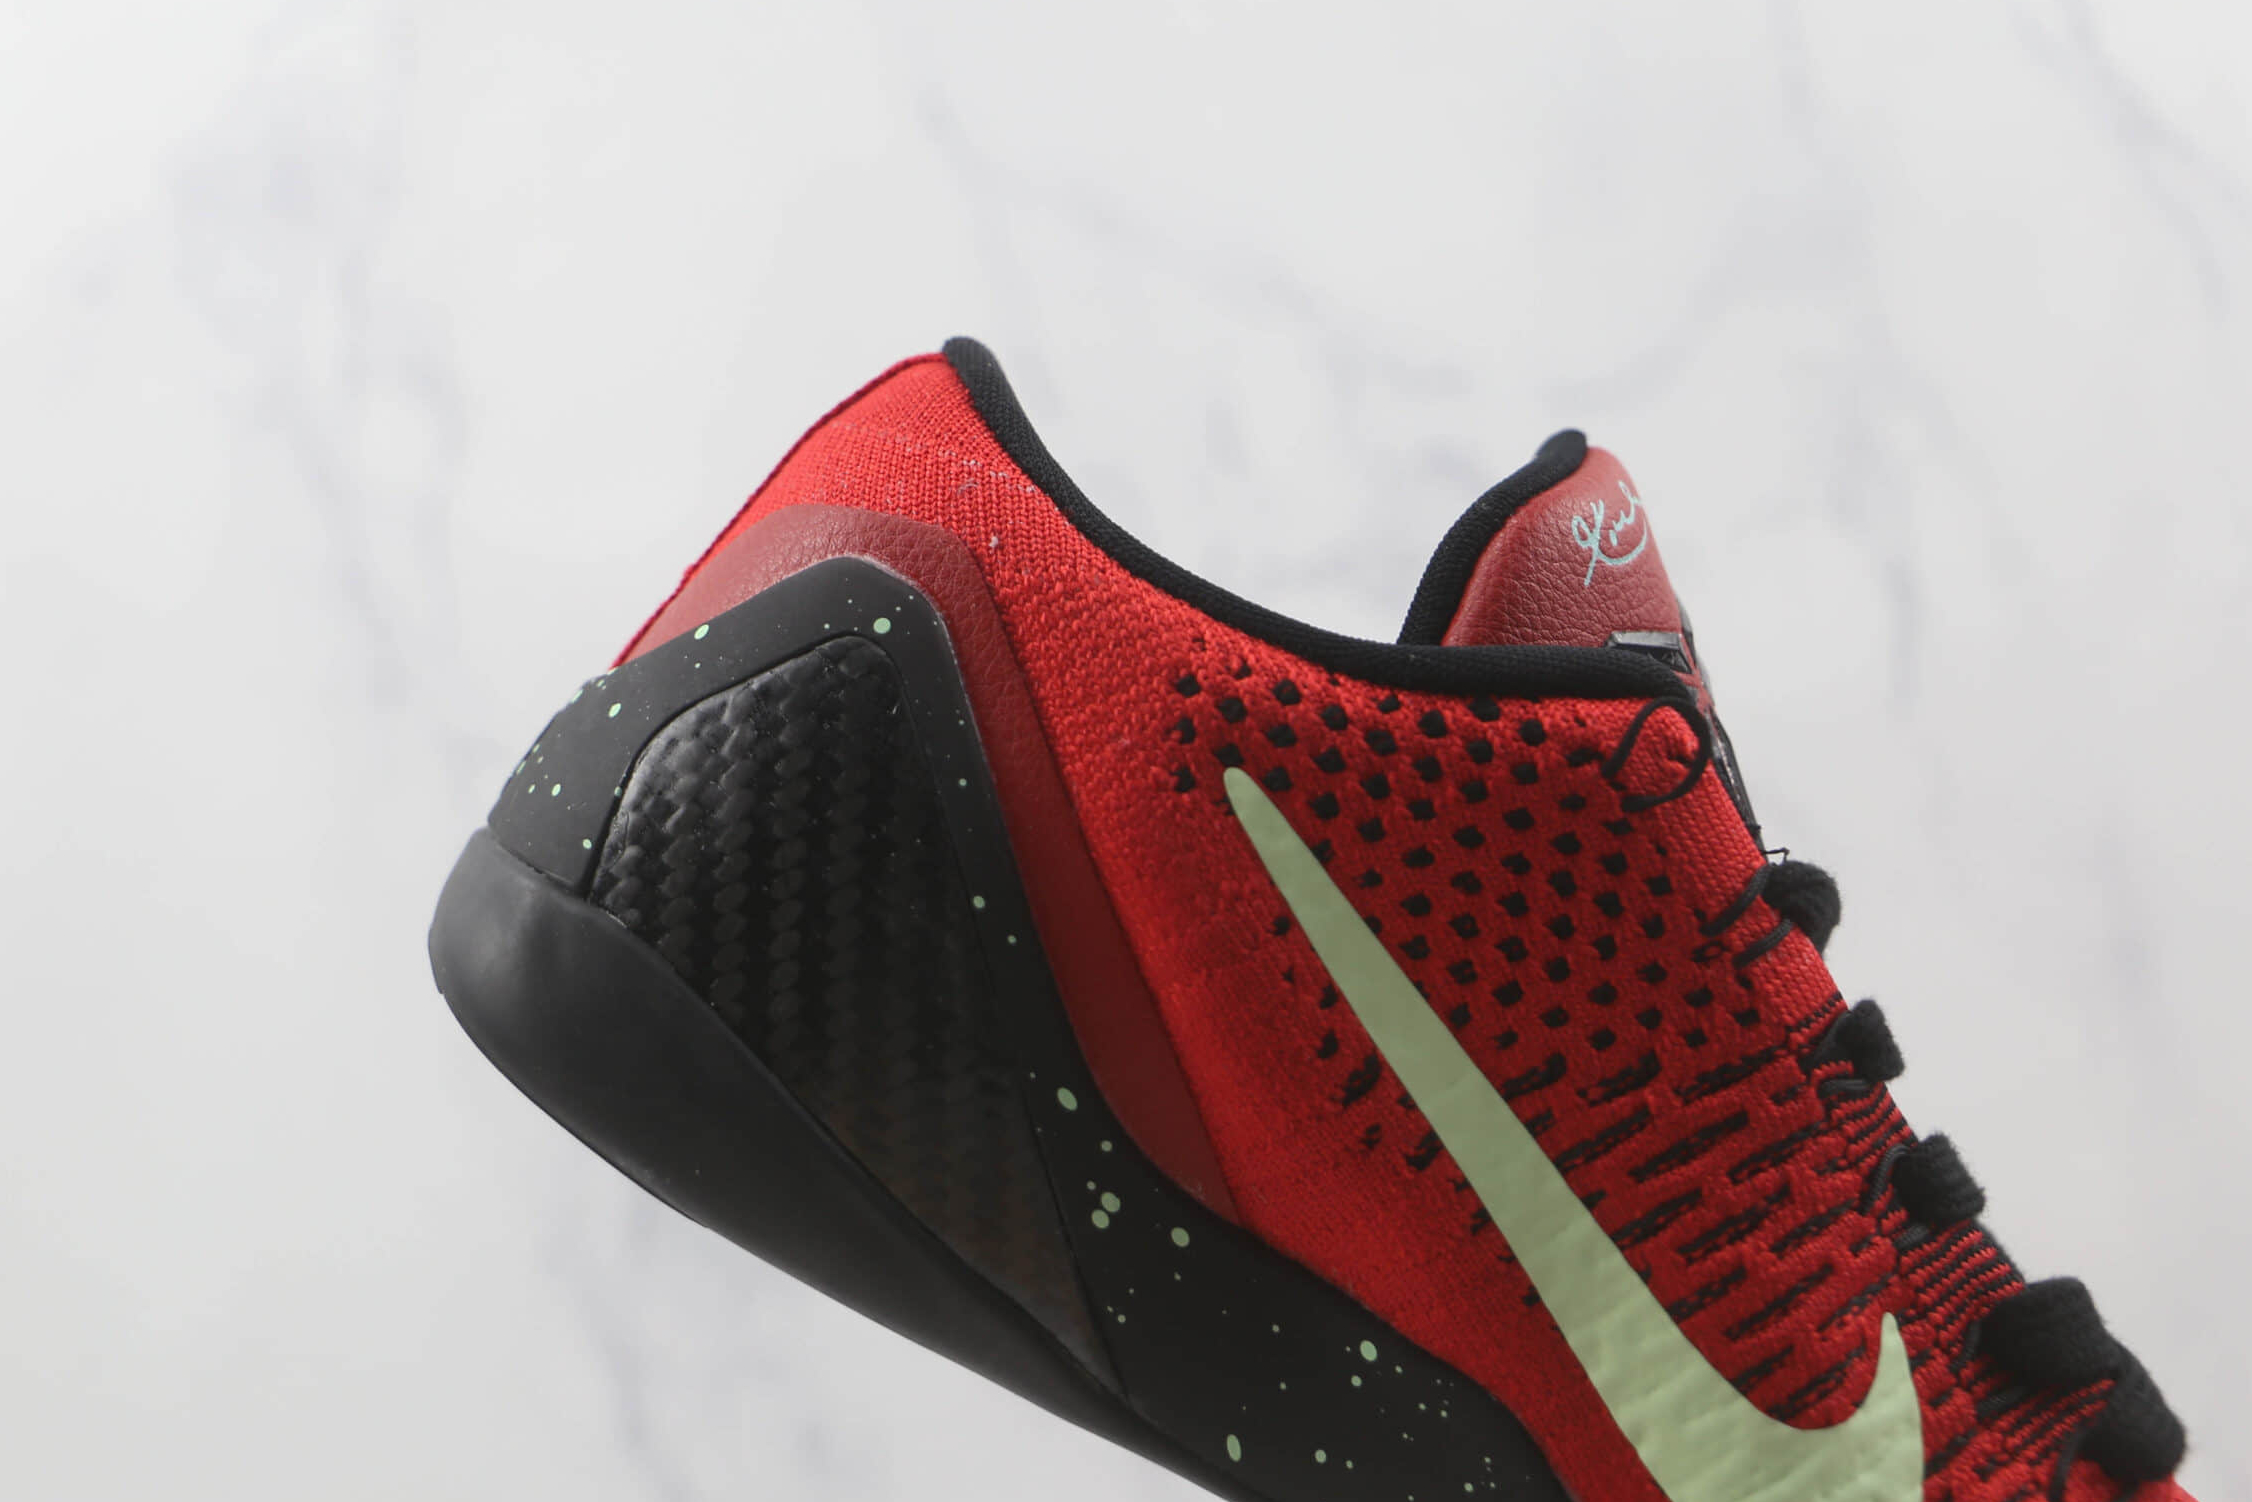 Nike Kobe 9 Elite Low 'University Red' 639045-600 - Premium Basketball Shoes